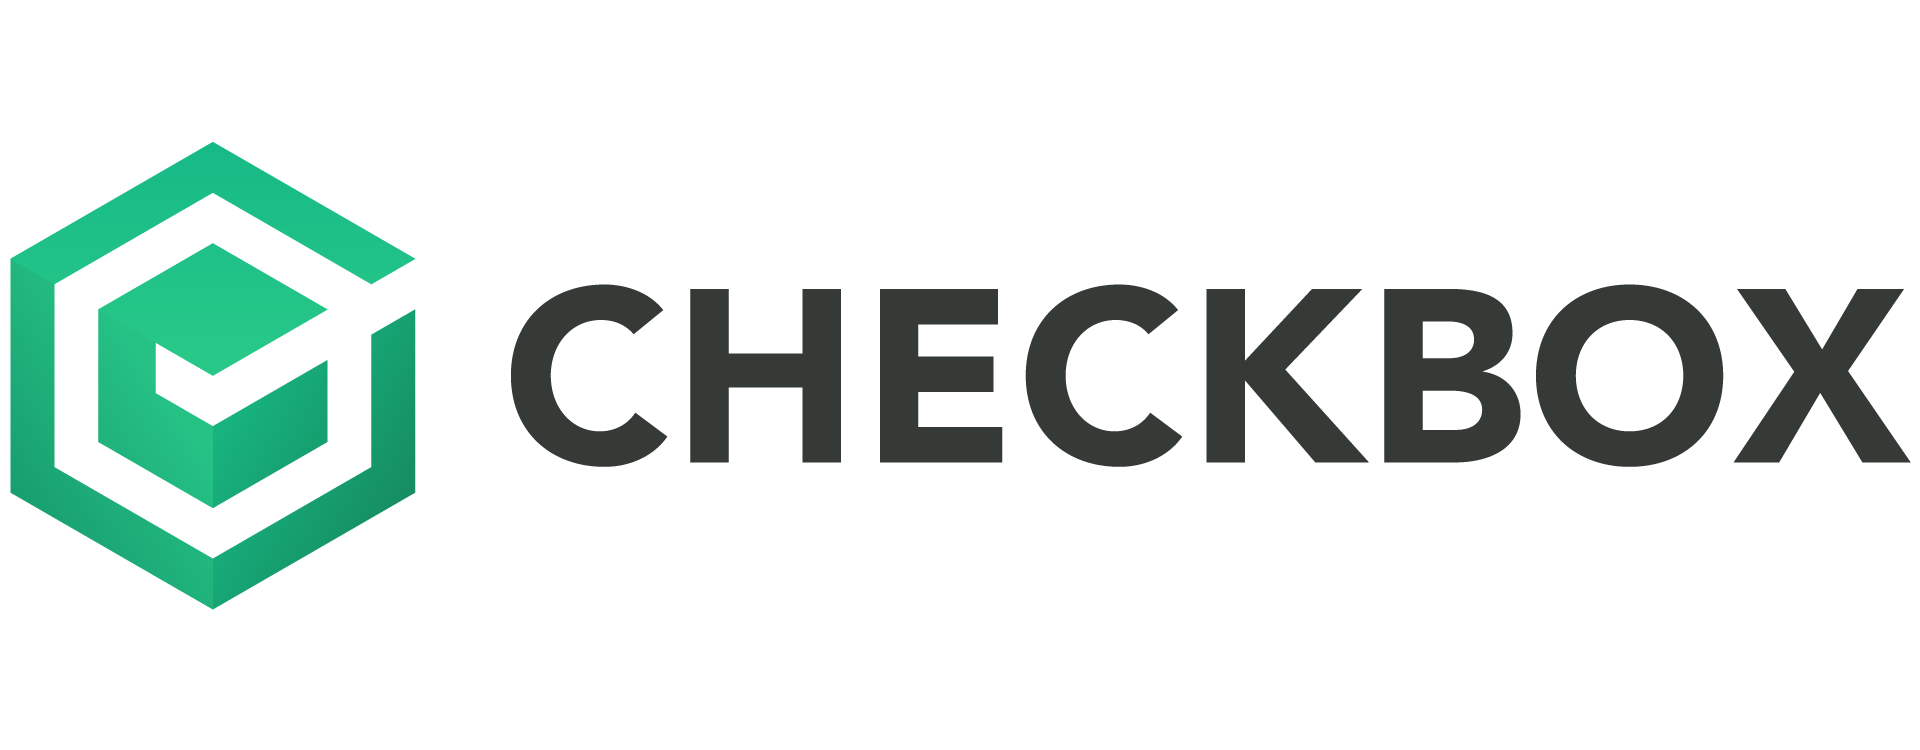 Check Box Logo - Checkbox - No Code Automation Platform for Legal & Compliance